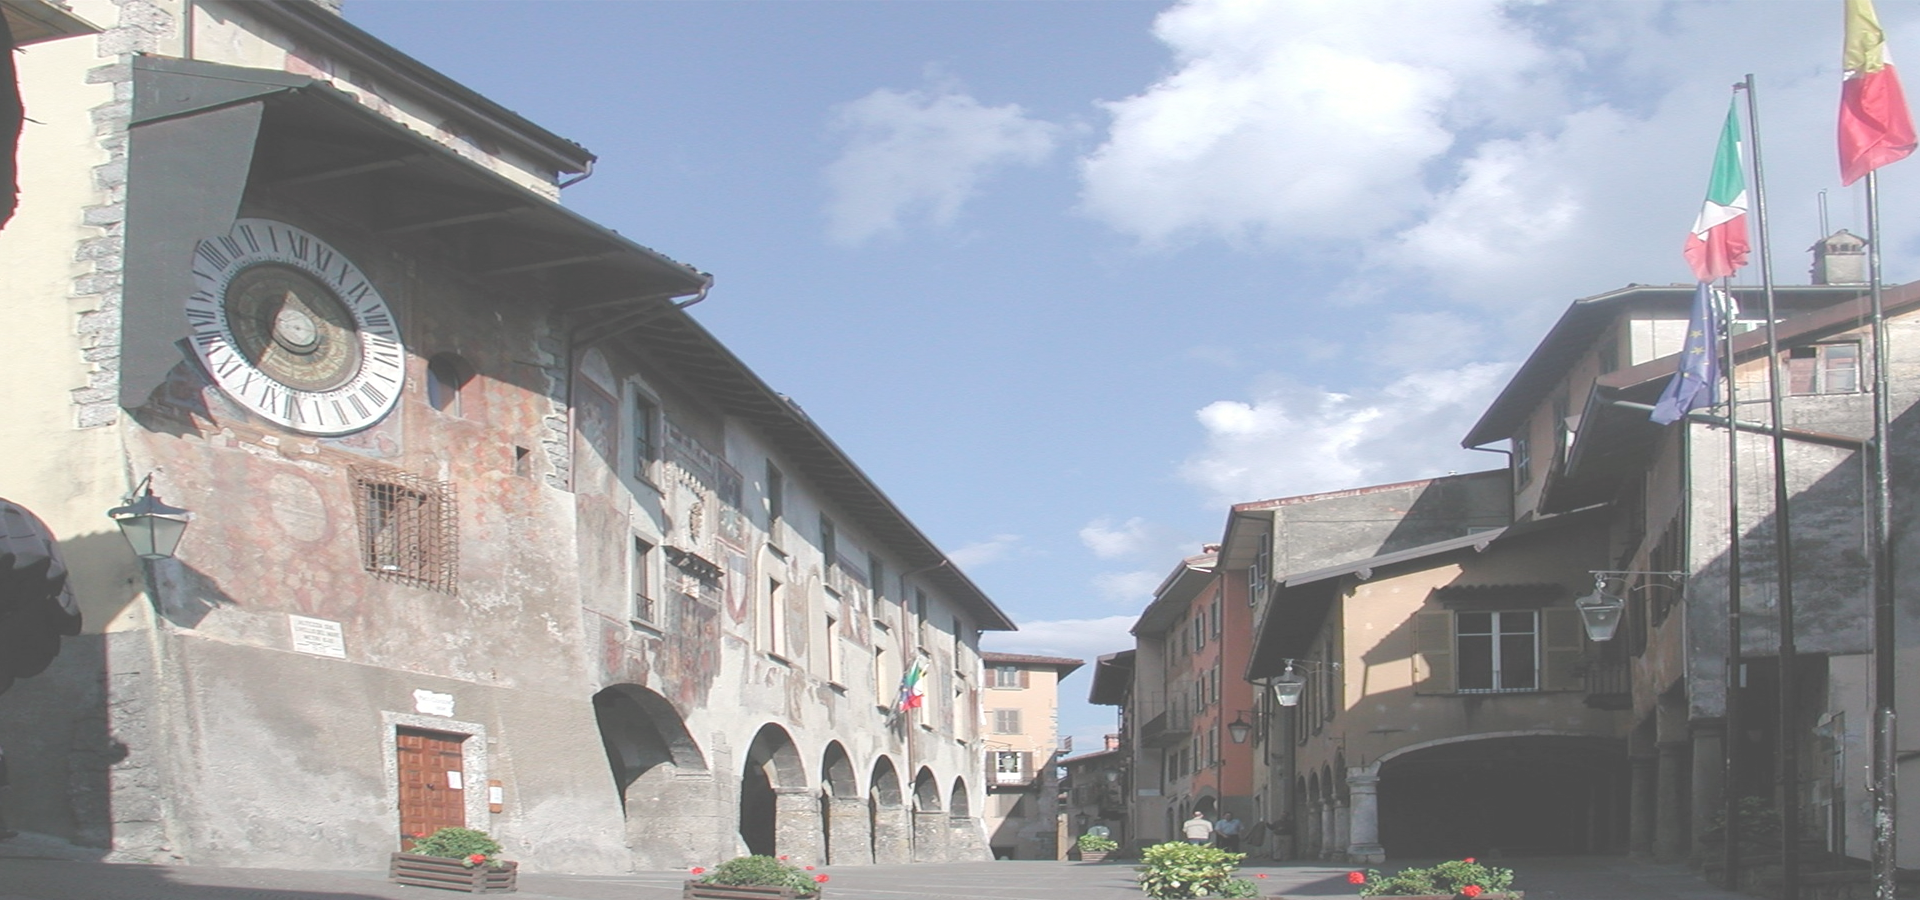 <b>Clusone, Province of Bergamo, Lombardy, Italy</b>